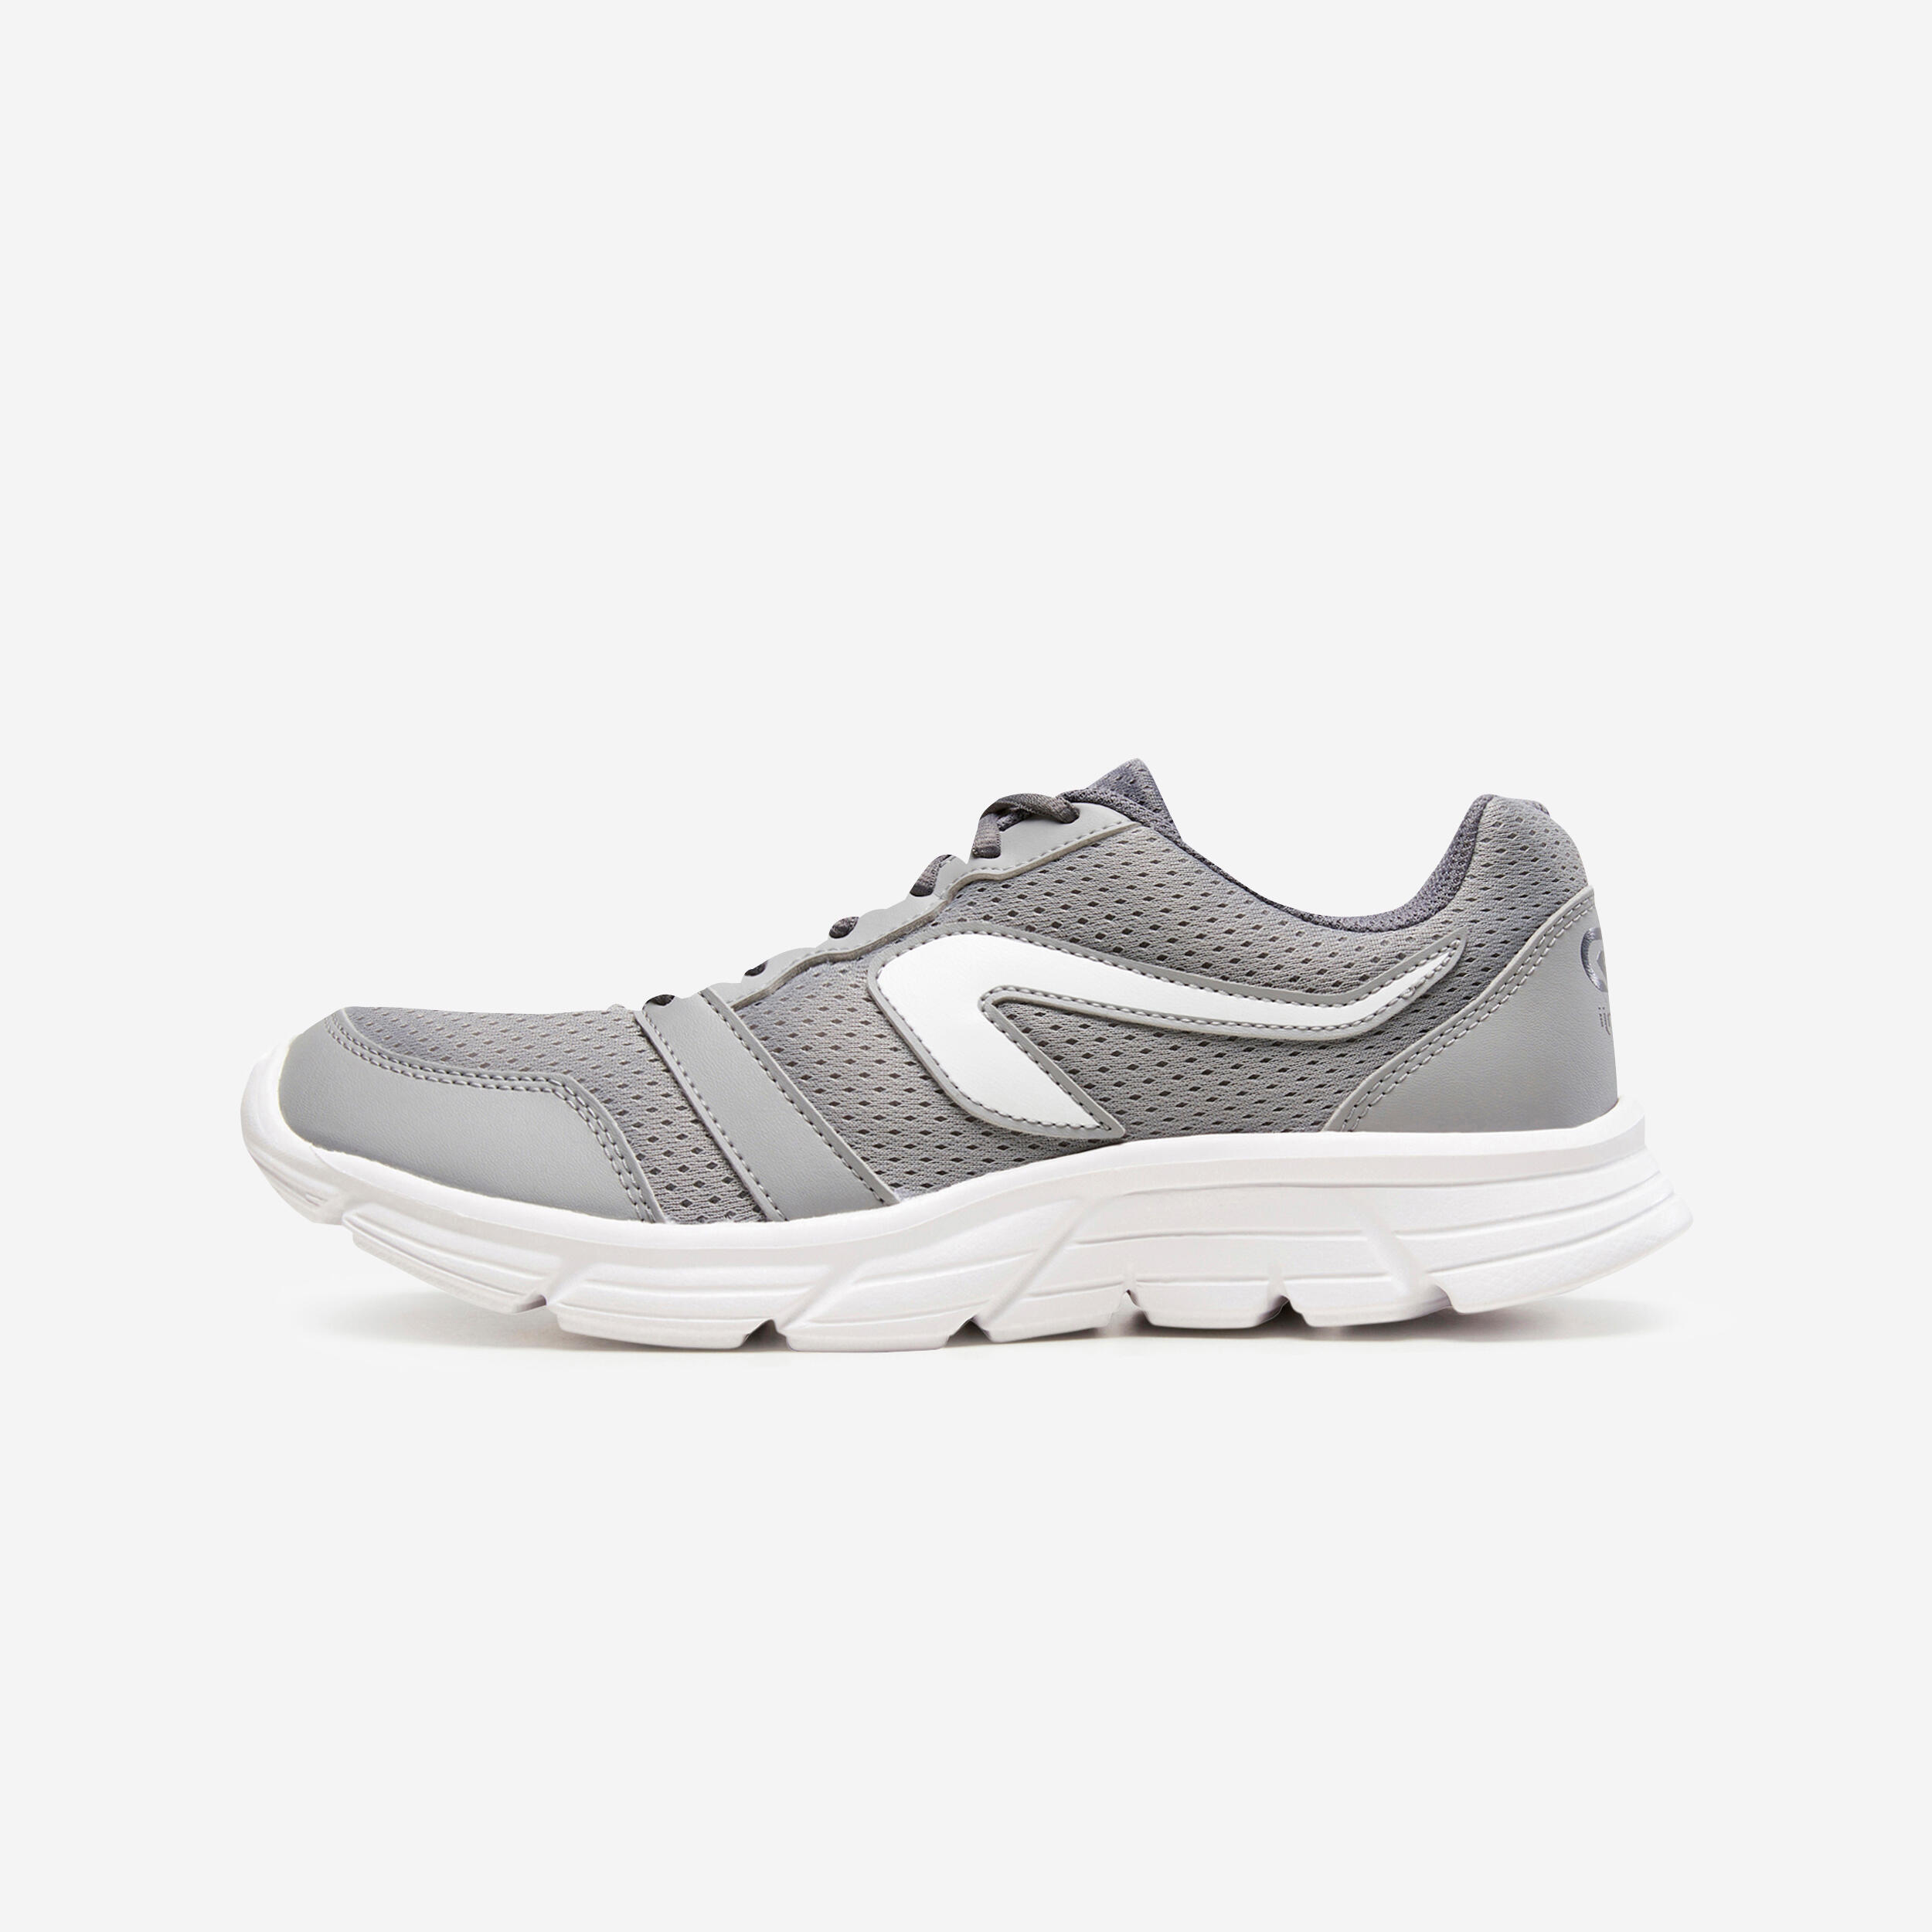 Men's Running Shoes - 100 Grey - KALENJI